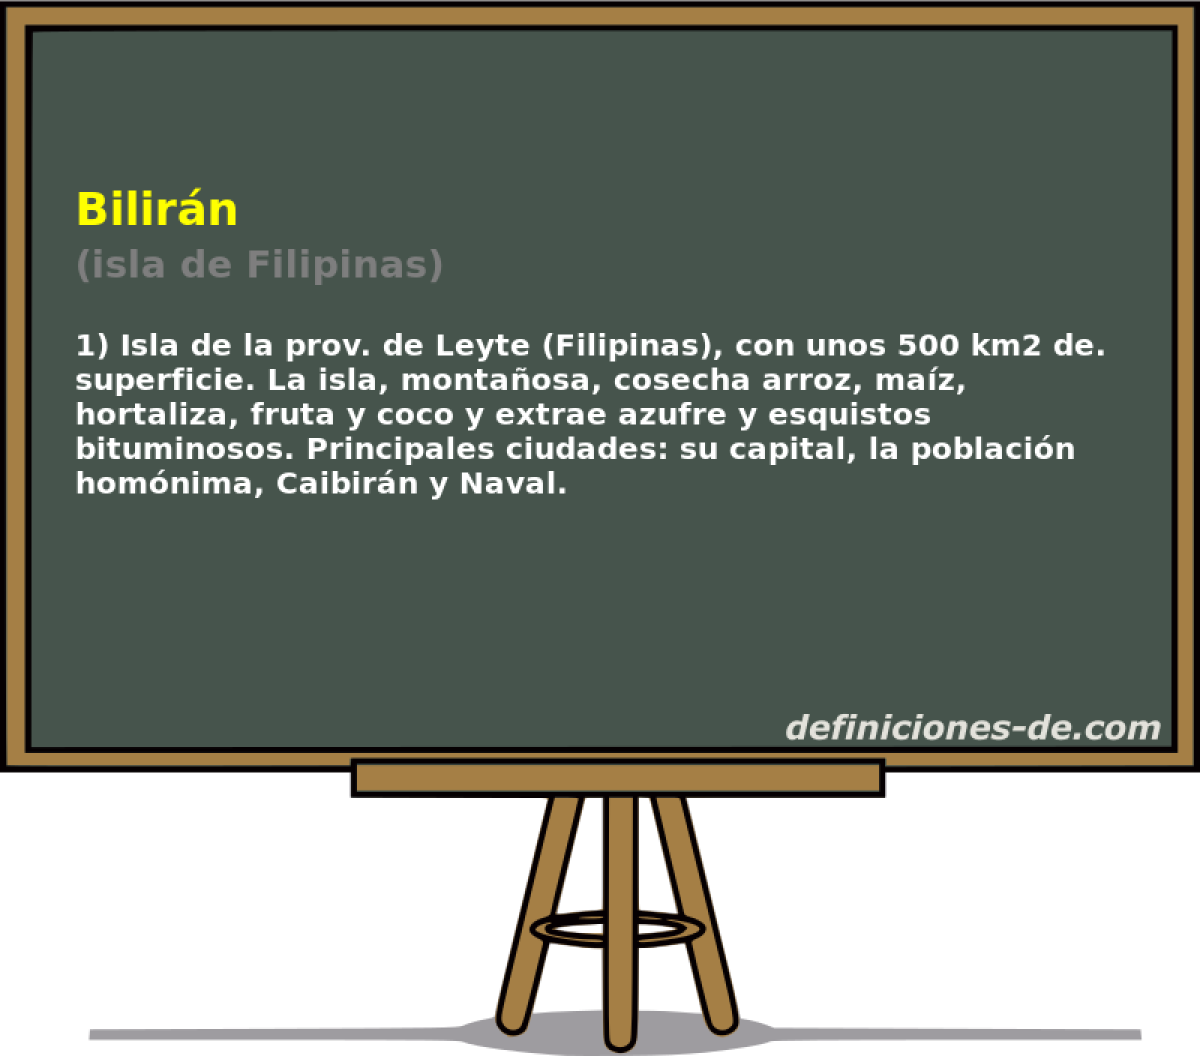 Bilirn (isla de Filipinas)